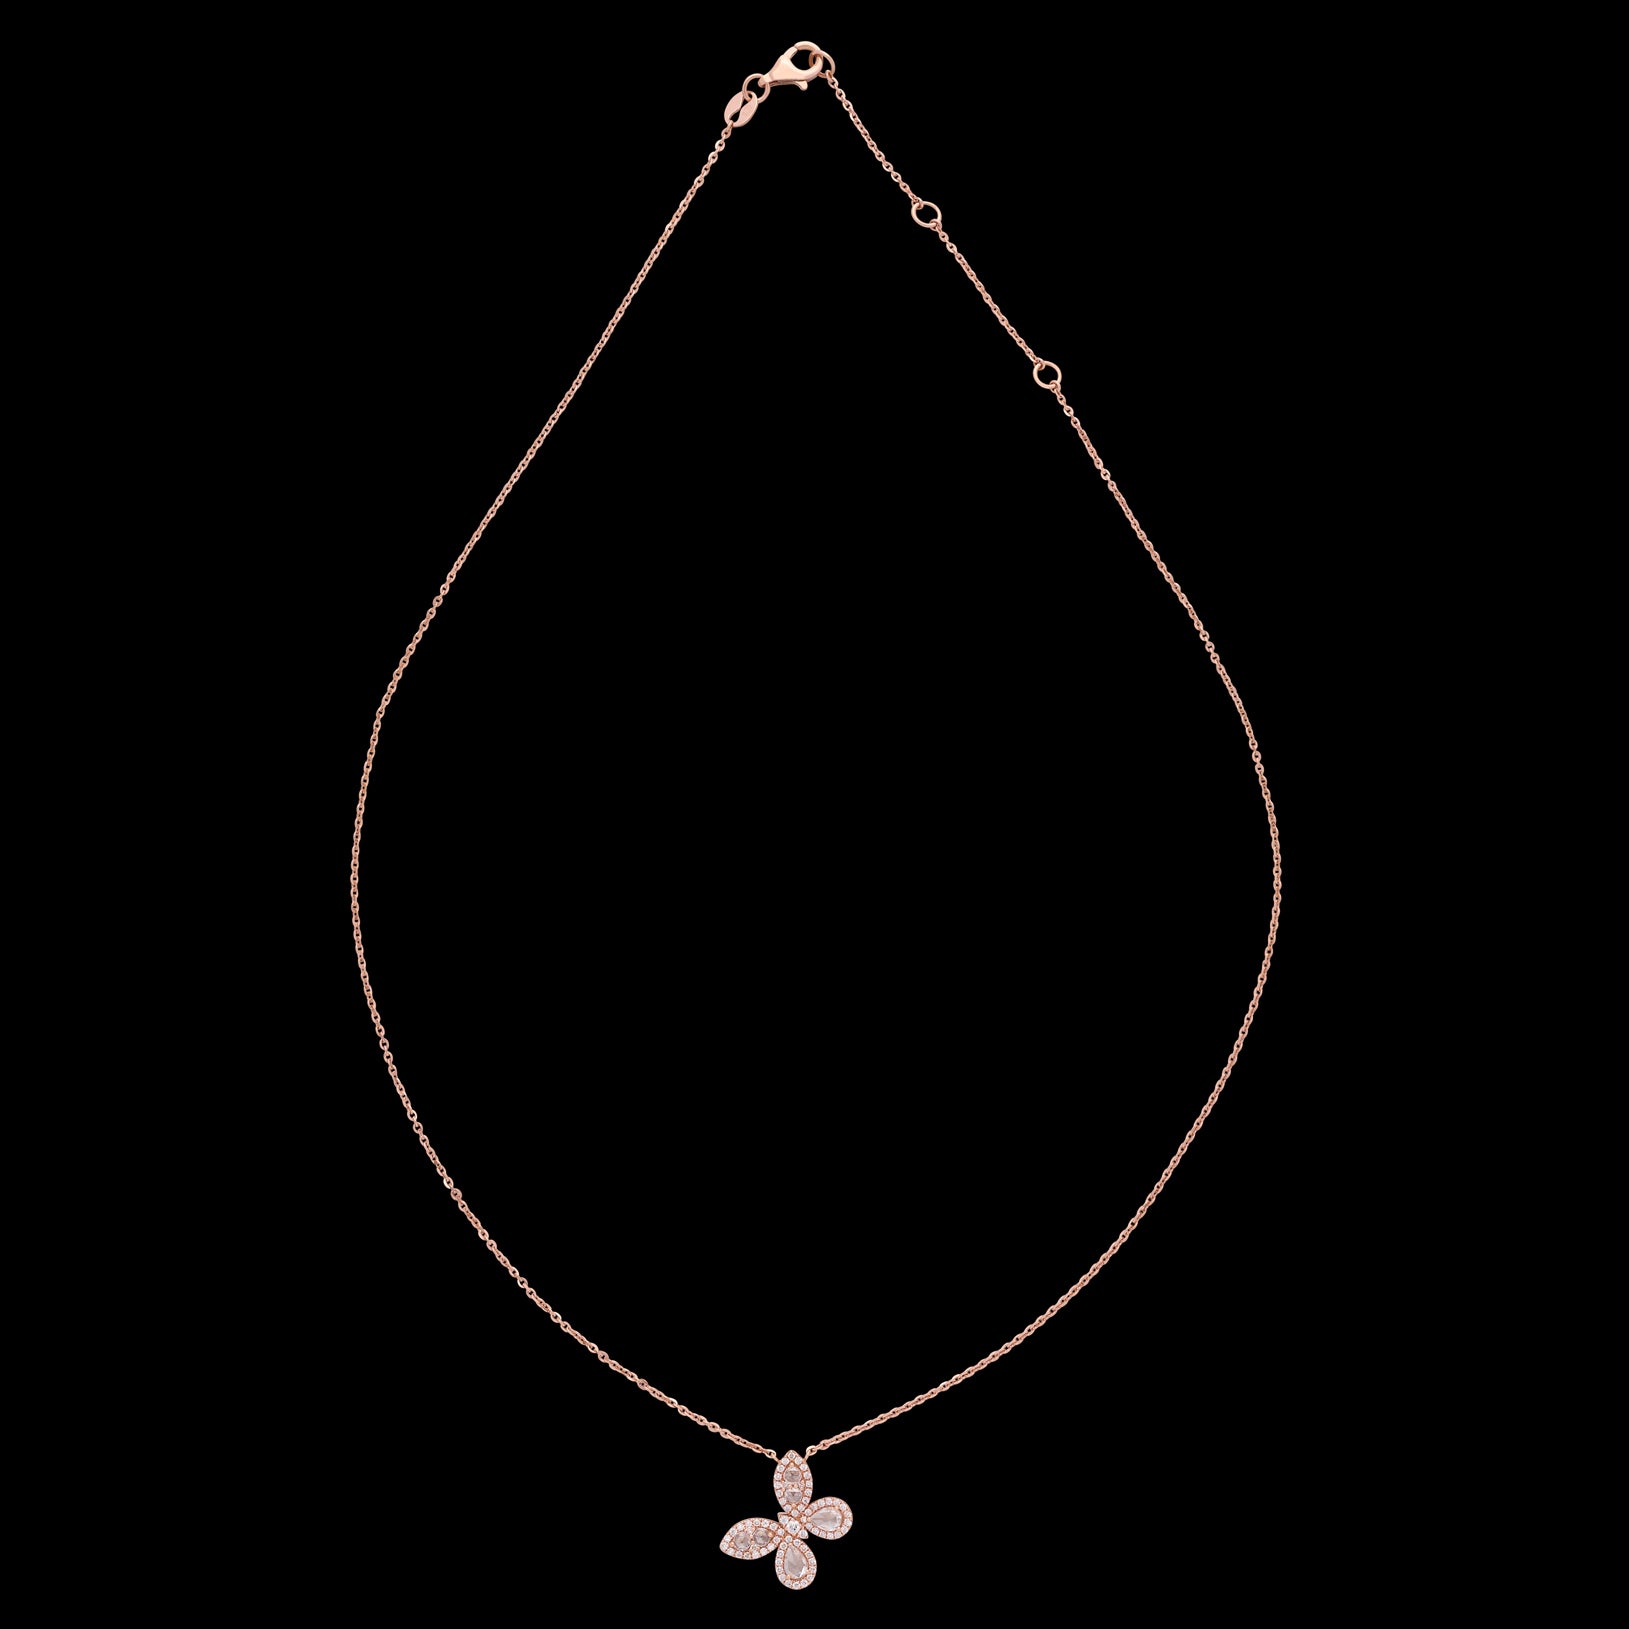 Louis Vuitton 18K Diamond Star Blossom Pendant Necklace - 18K Rose